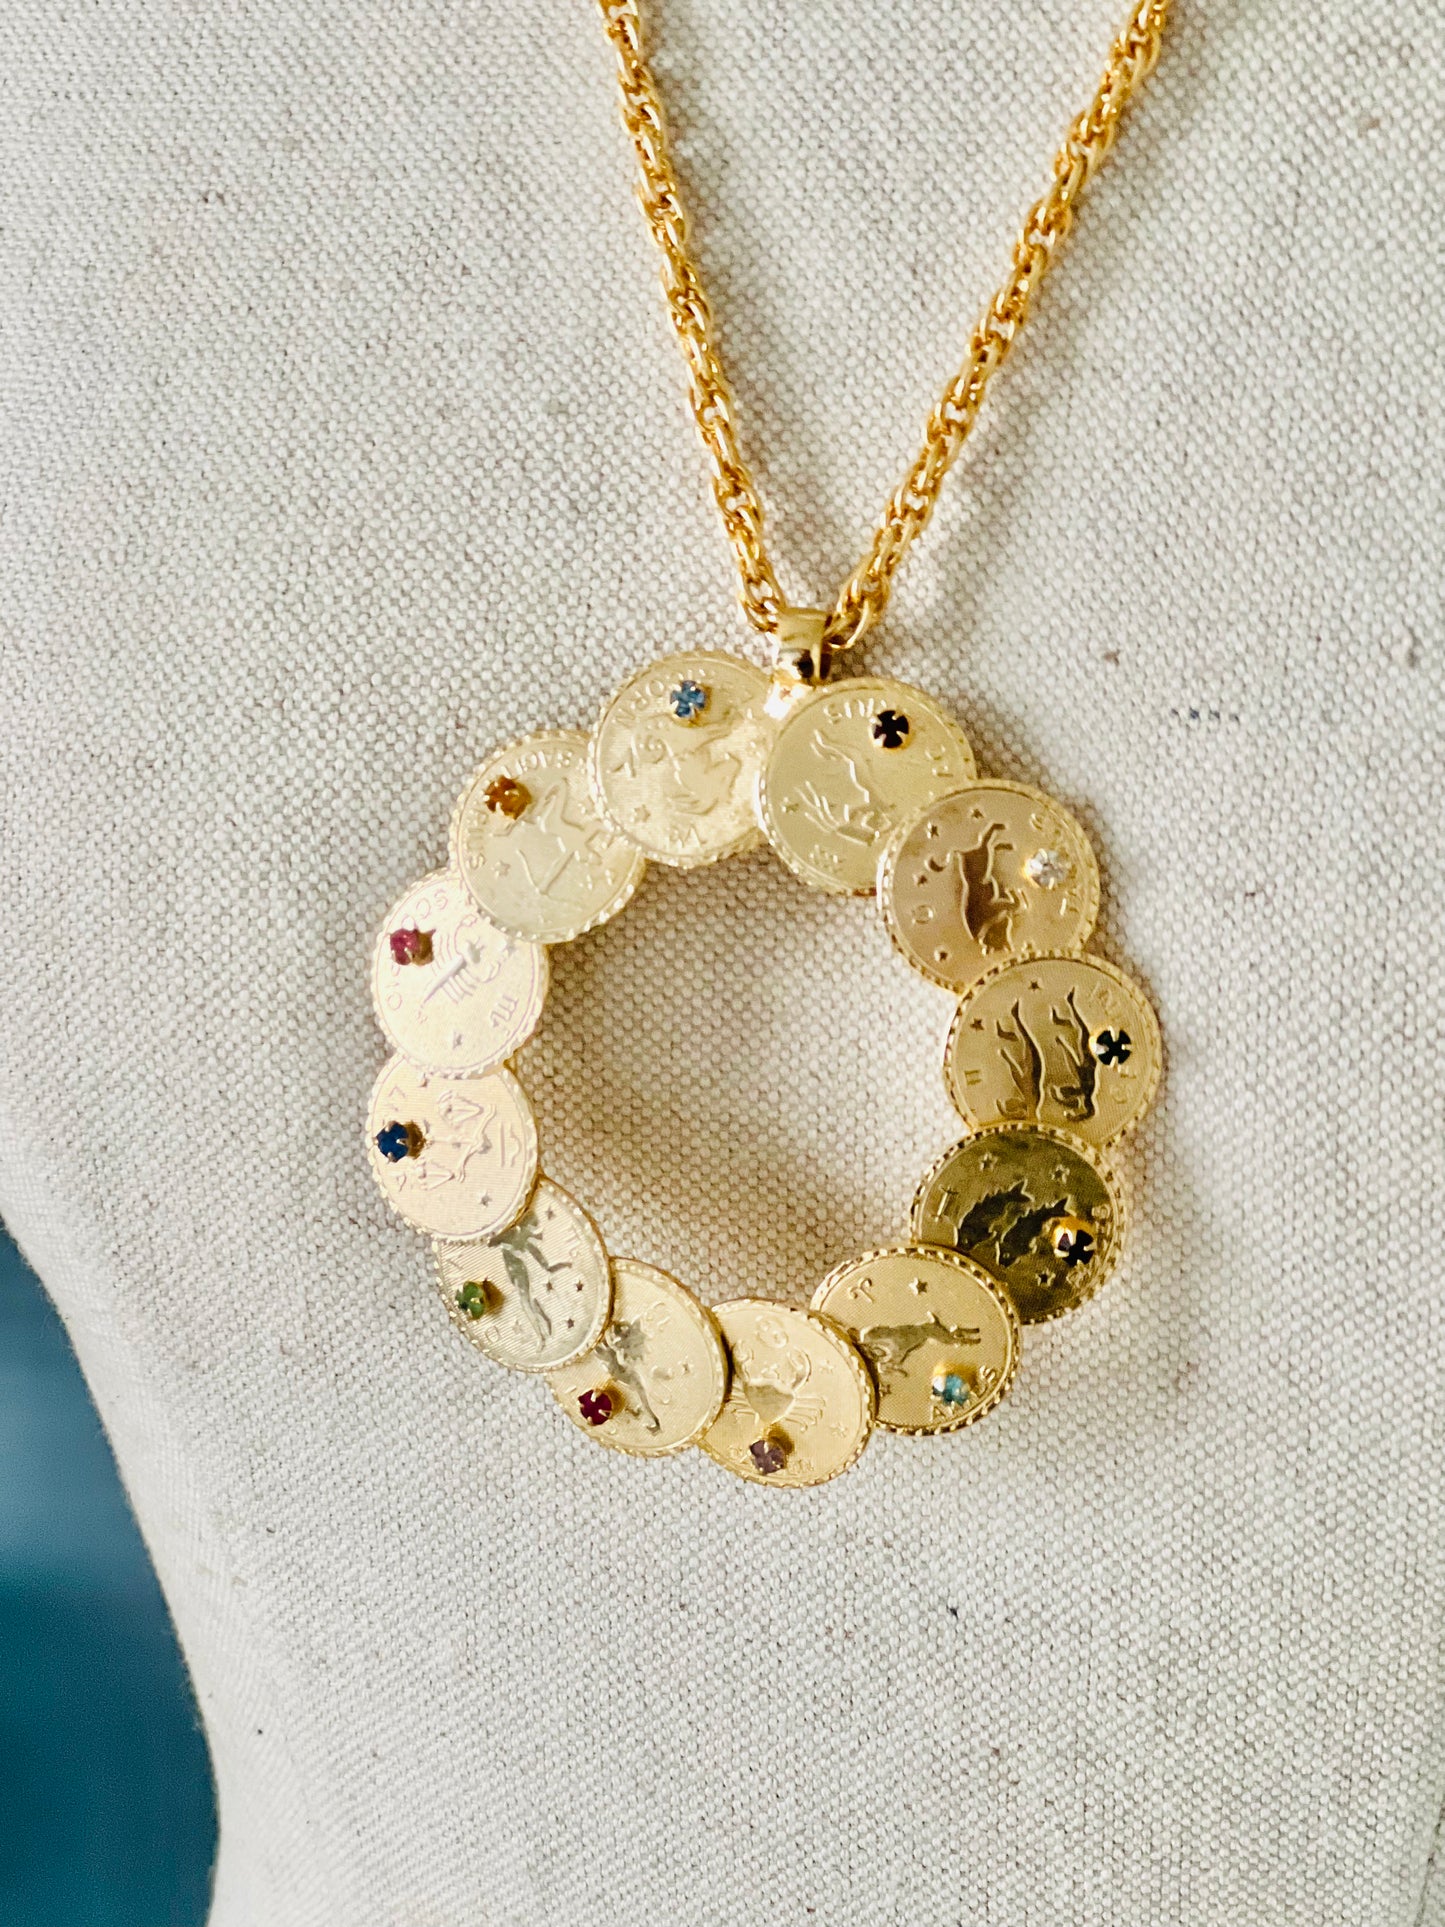 Deadstock 1970s Massive Zodiac Astrology Gold Pendant Necklace